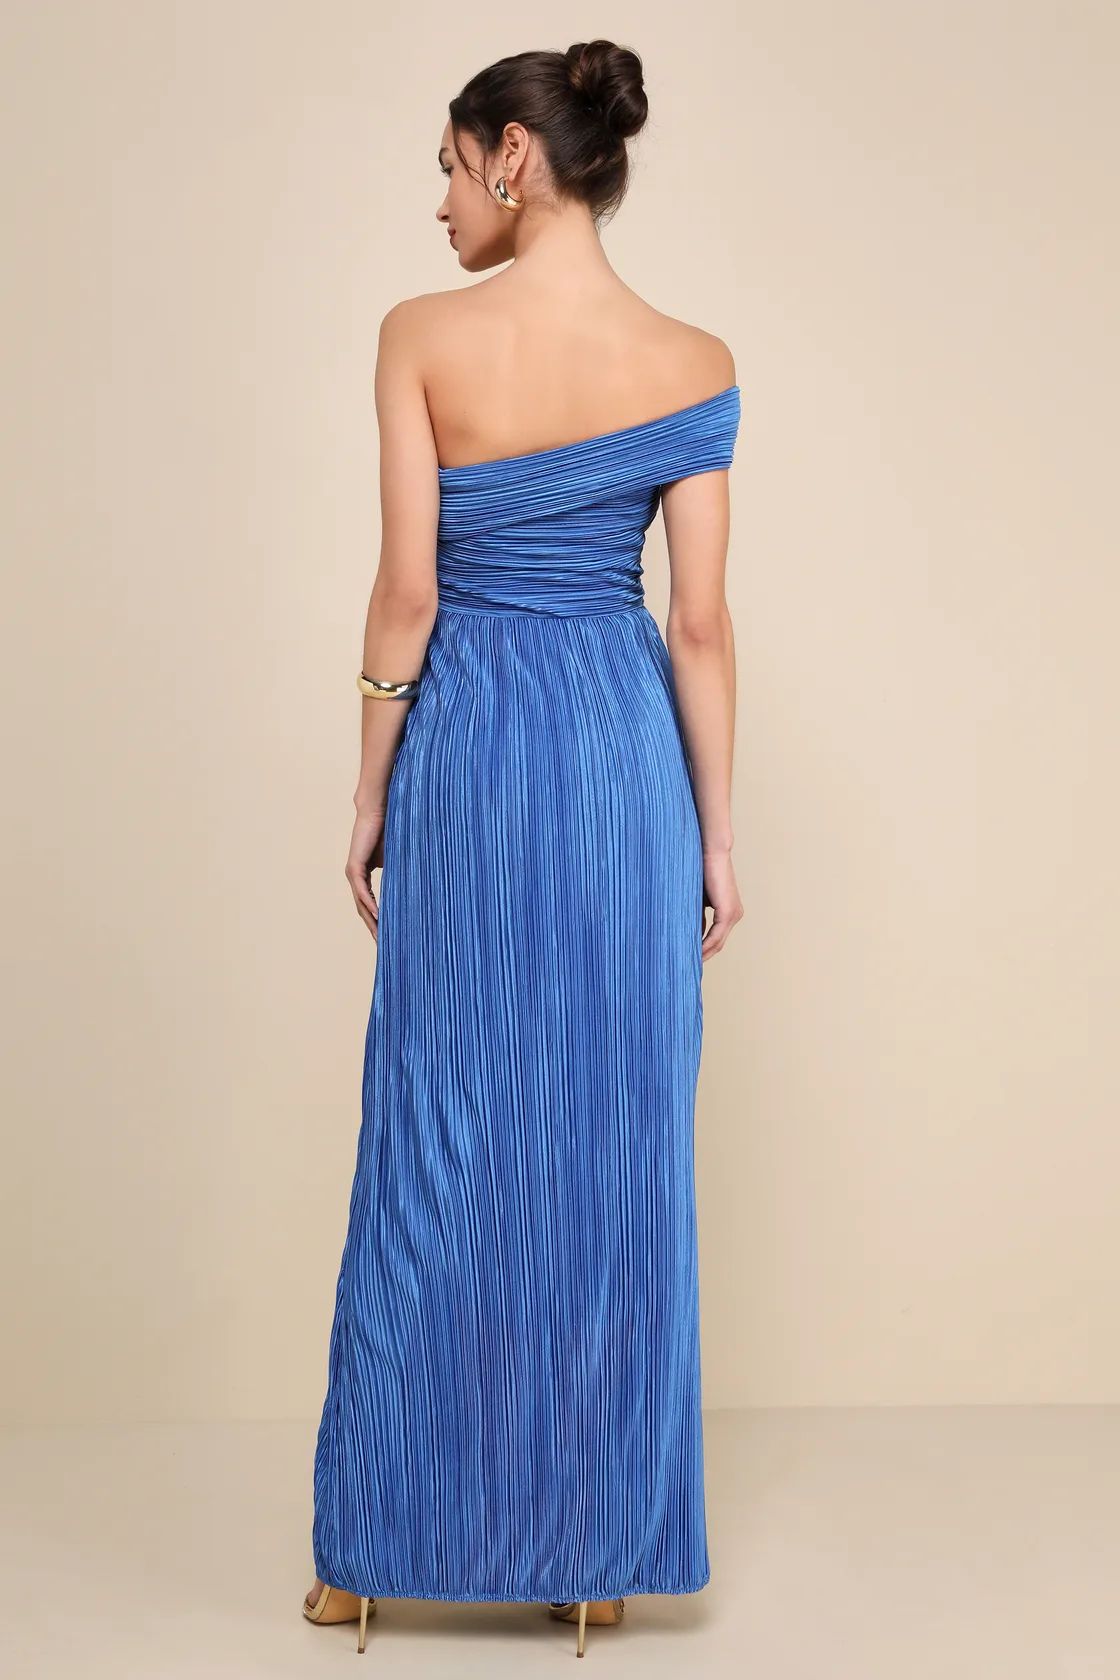 Poised Performance Blue Plisse One-Shoulder Maxi Dress | Lulus